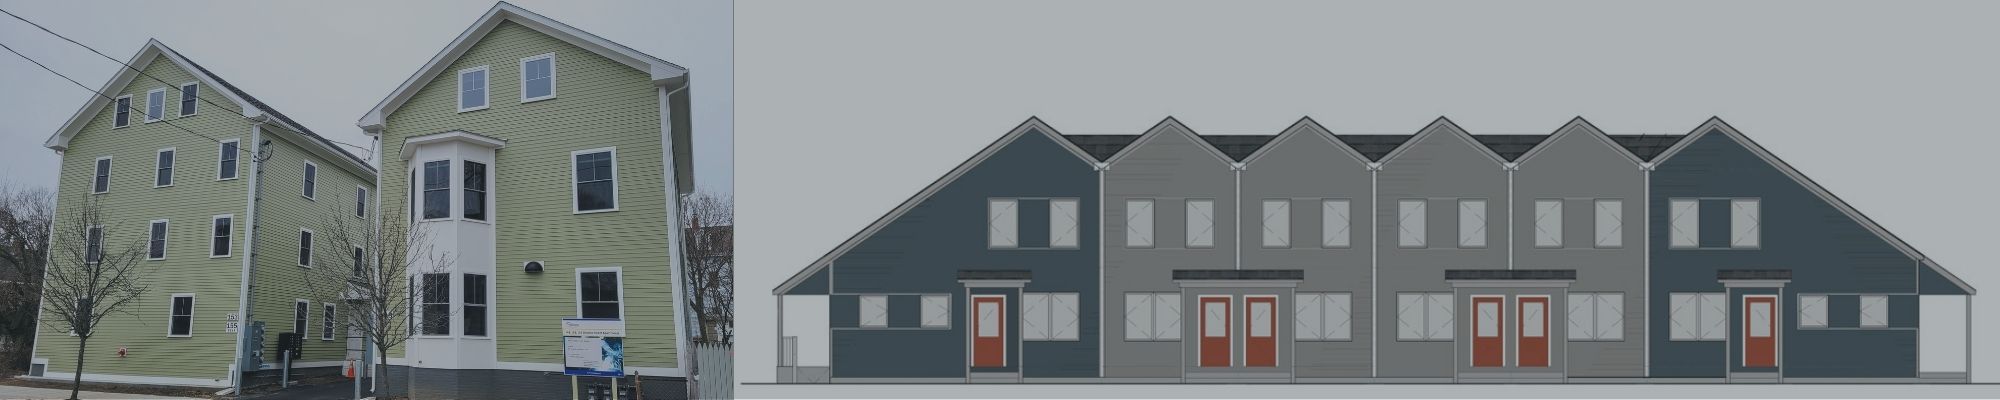 WPRI: 17 viviendas asequibles desveladas en Olneyville